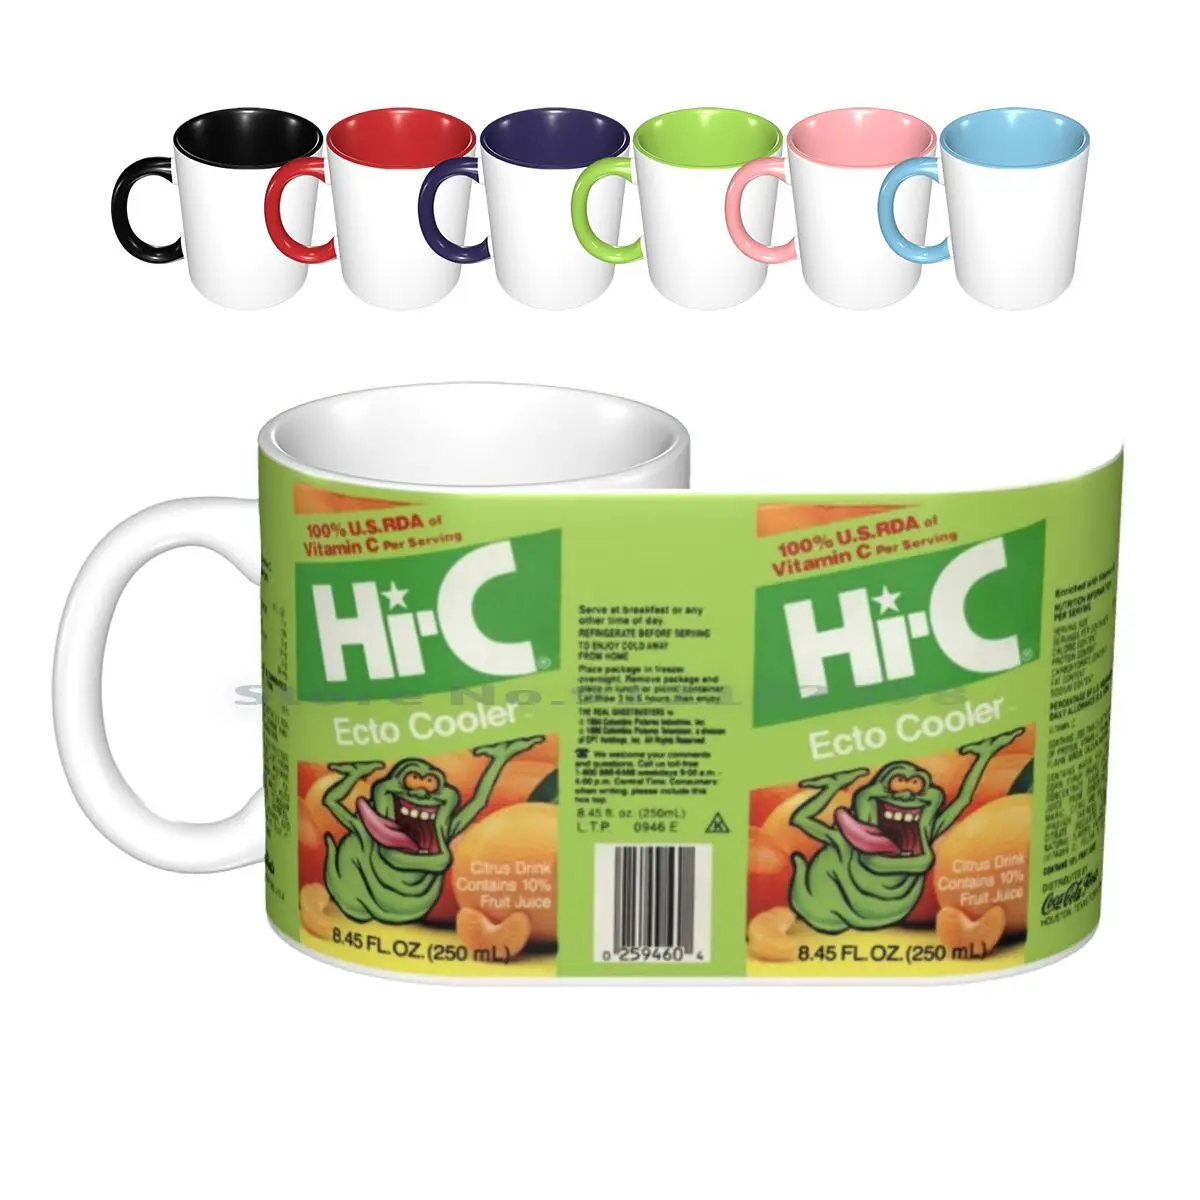 https://ae01.alicdn.com/kf/Ha1a792de297246ce9416e80f27c107b7K/Ghostbusters-Hi-C-Ecto-Cooler-Ceramic-Mugs-Coffee-Cups-Milk-Tea-Mug-Ghostbusters-Ecto-Cooler-Hi.jpg